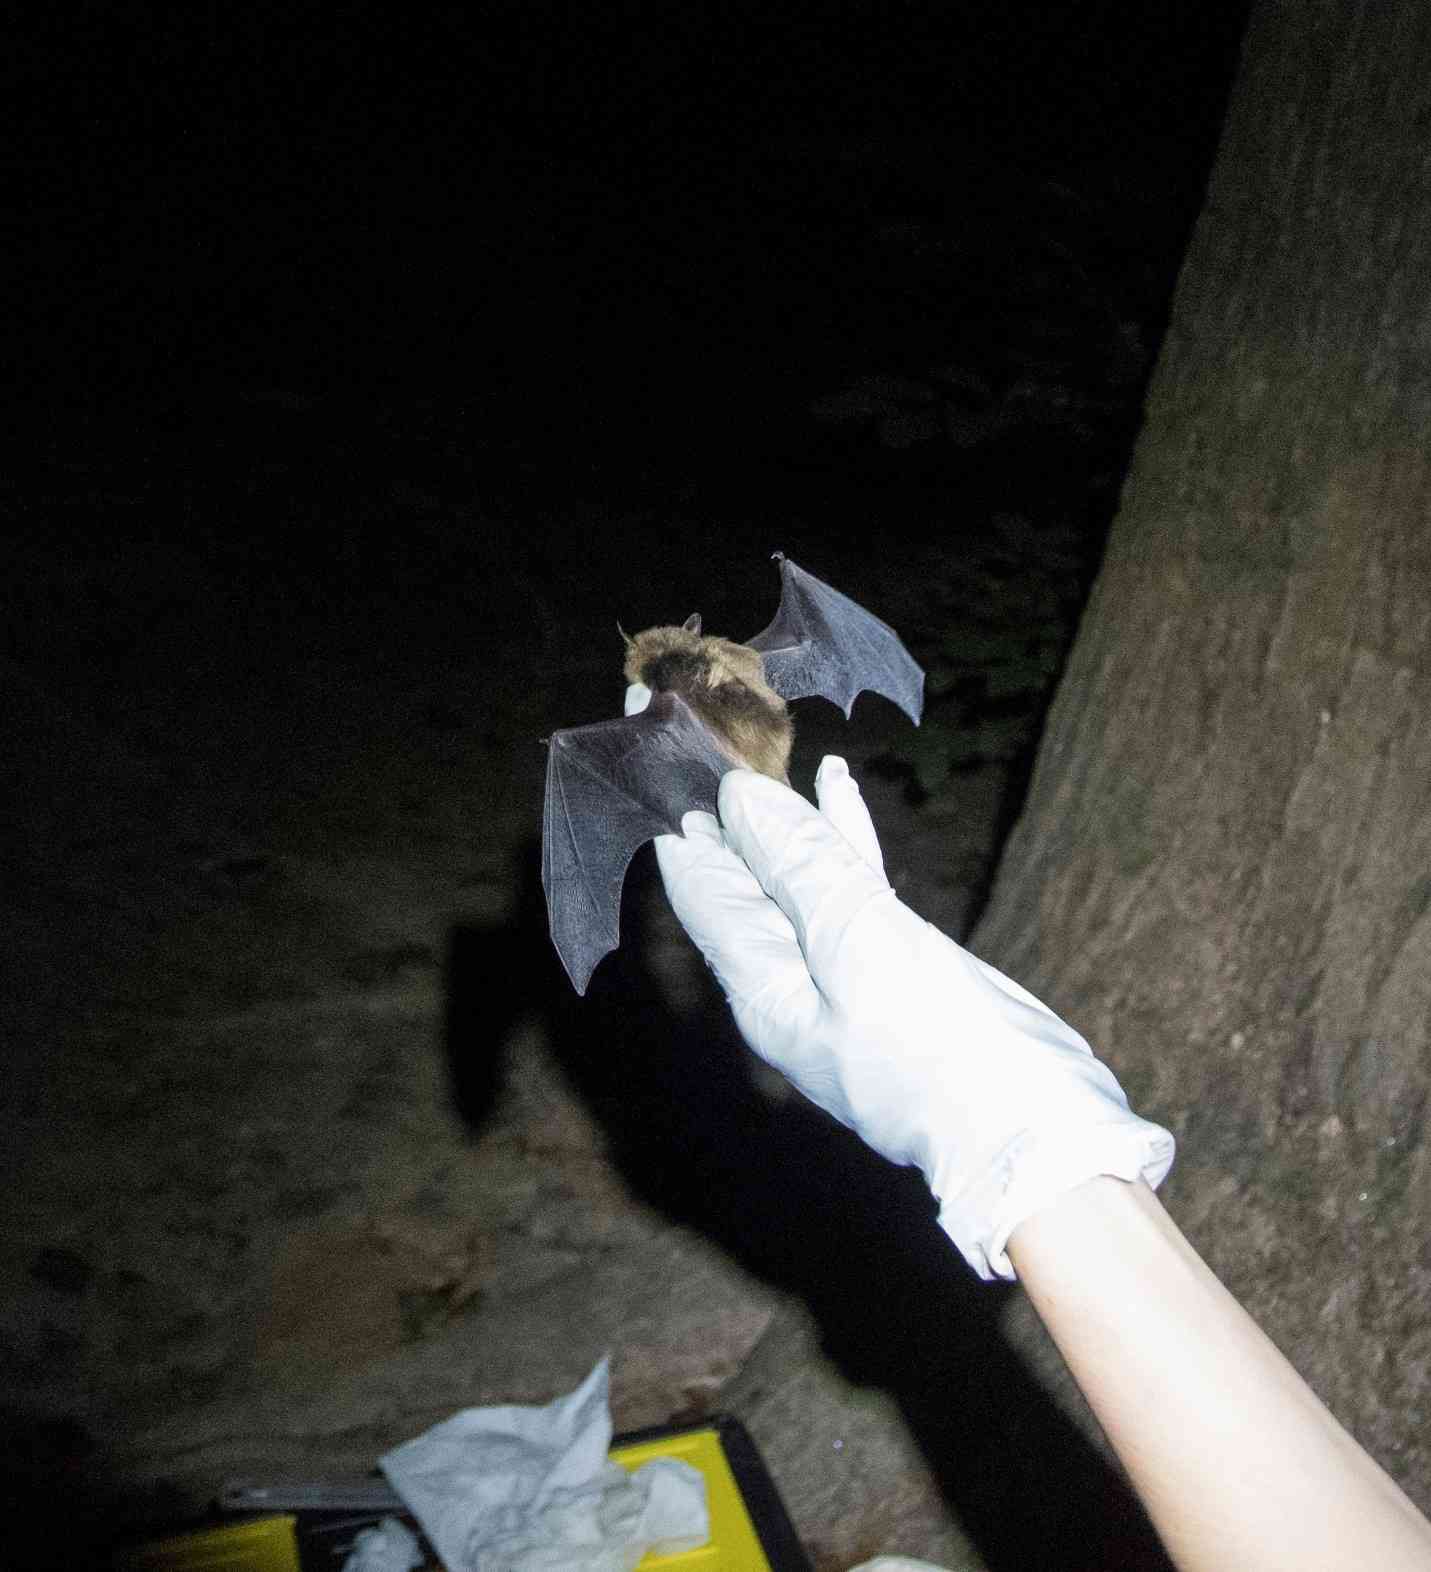 Releasing a big brown bat